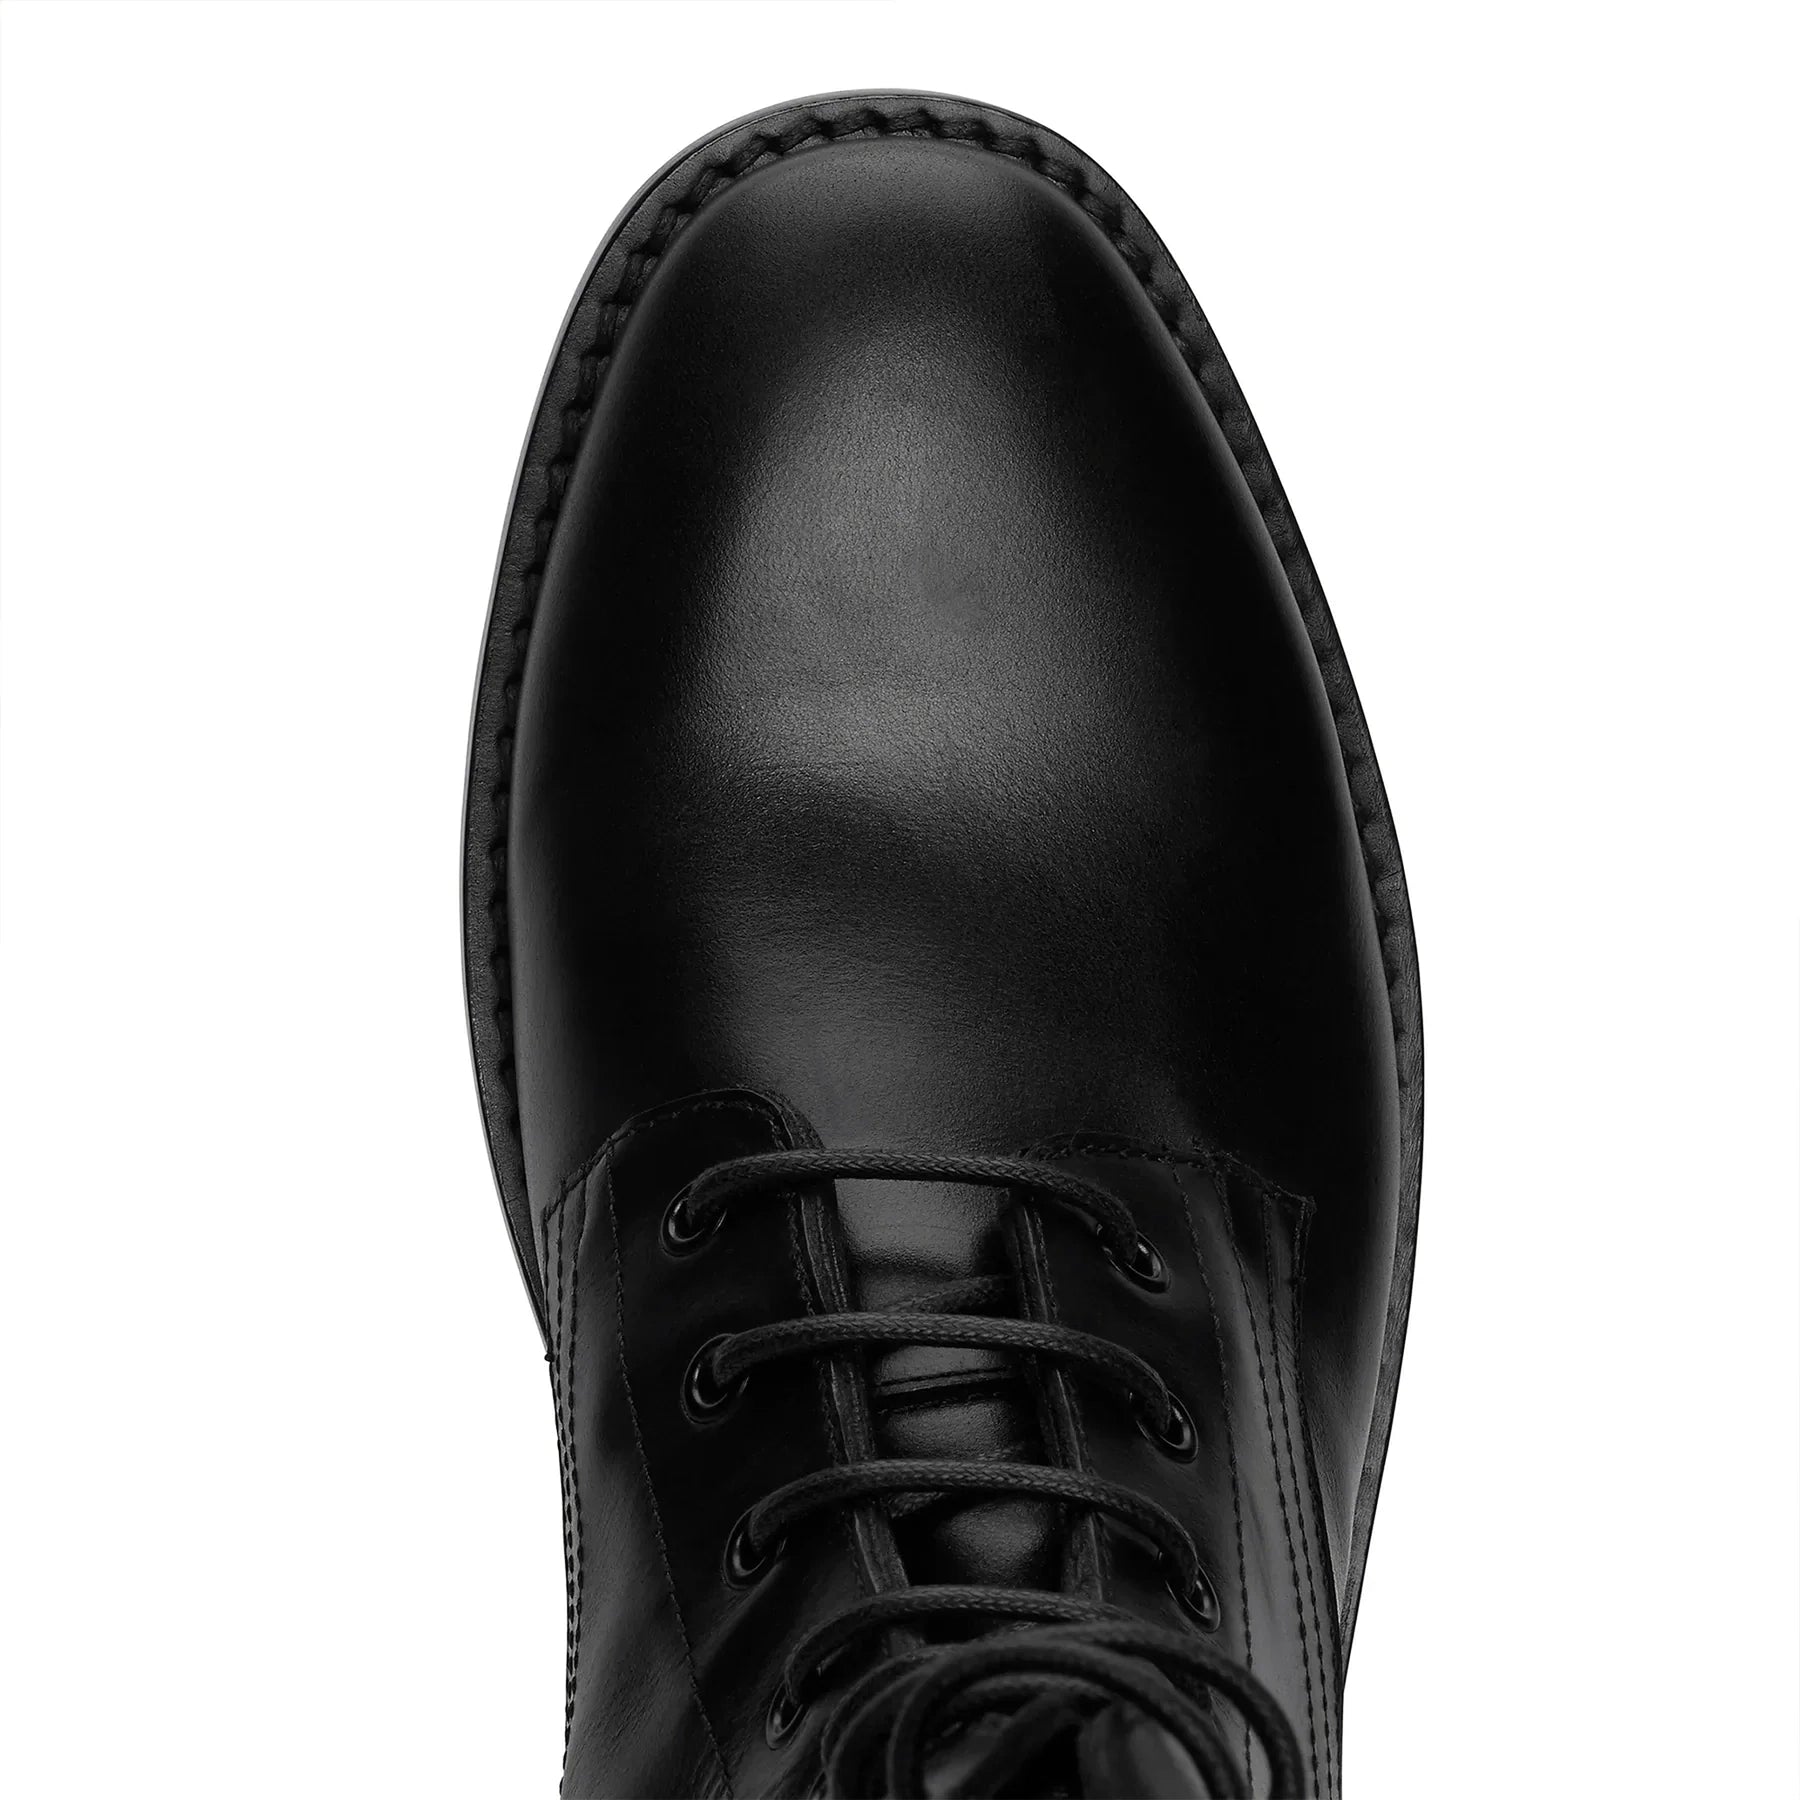 Sergio Zip Combat Boot - Black Leather